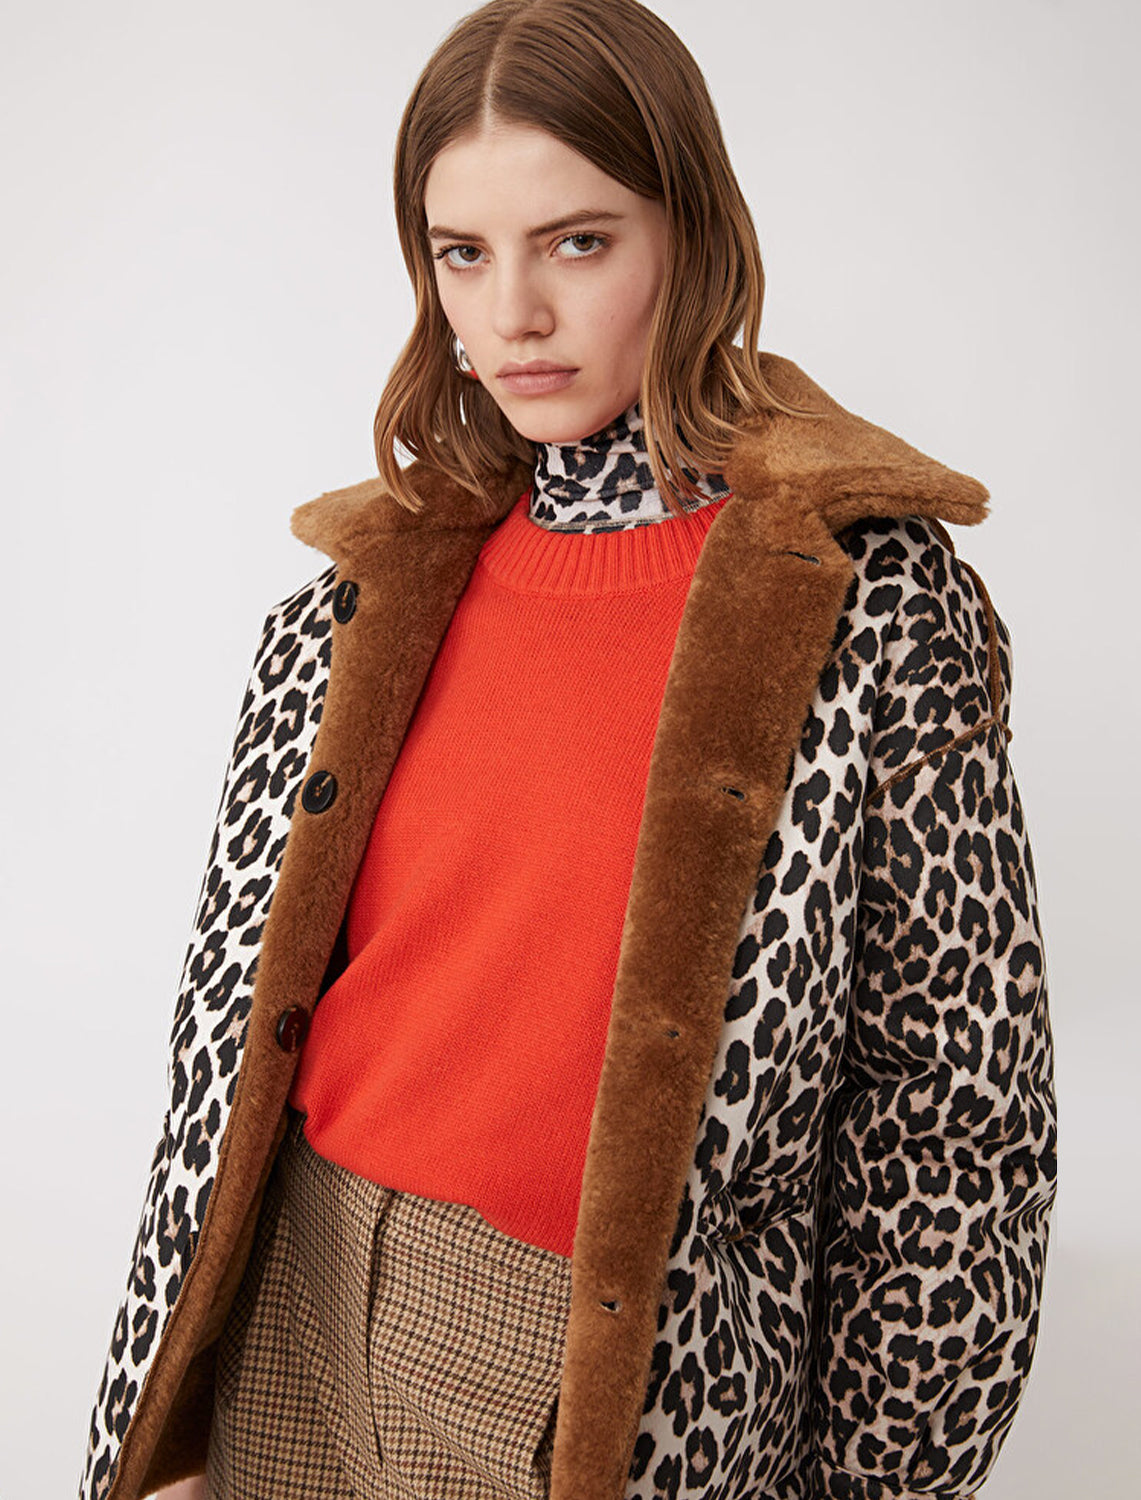 Women's Vegan Fur Coats & Jackets. Plush & Comfy